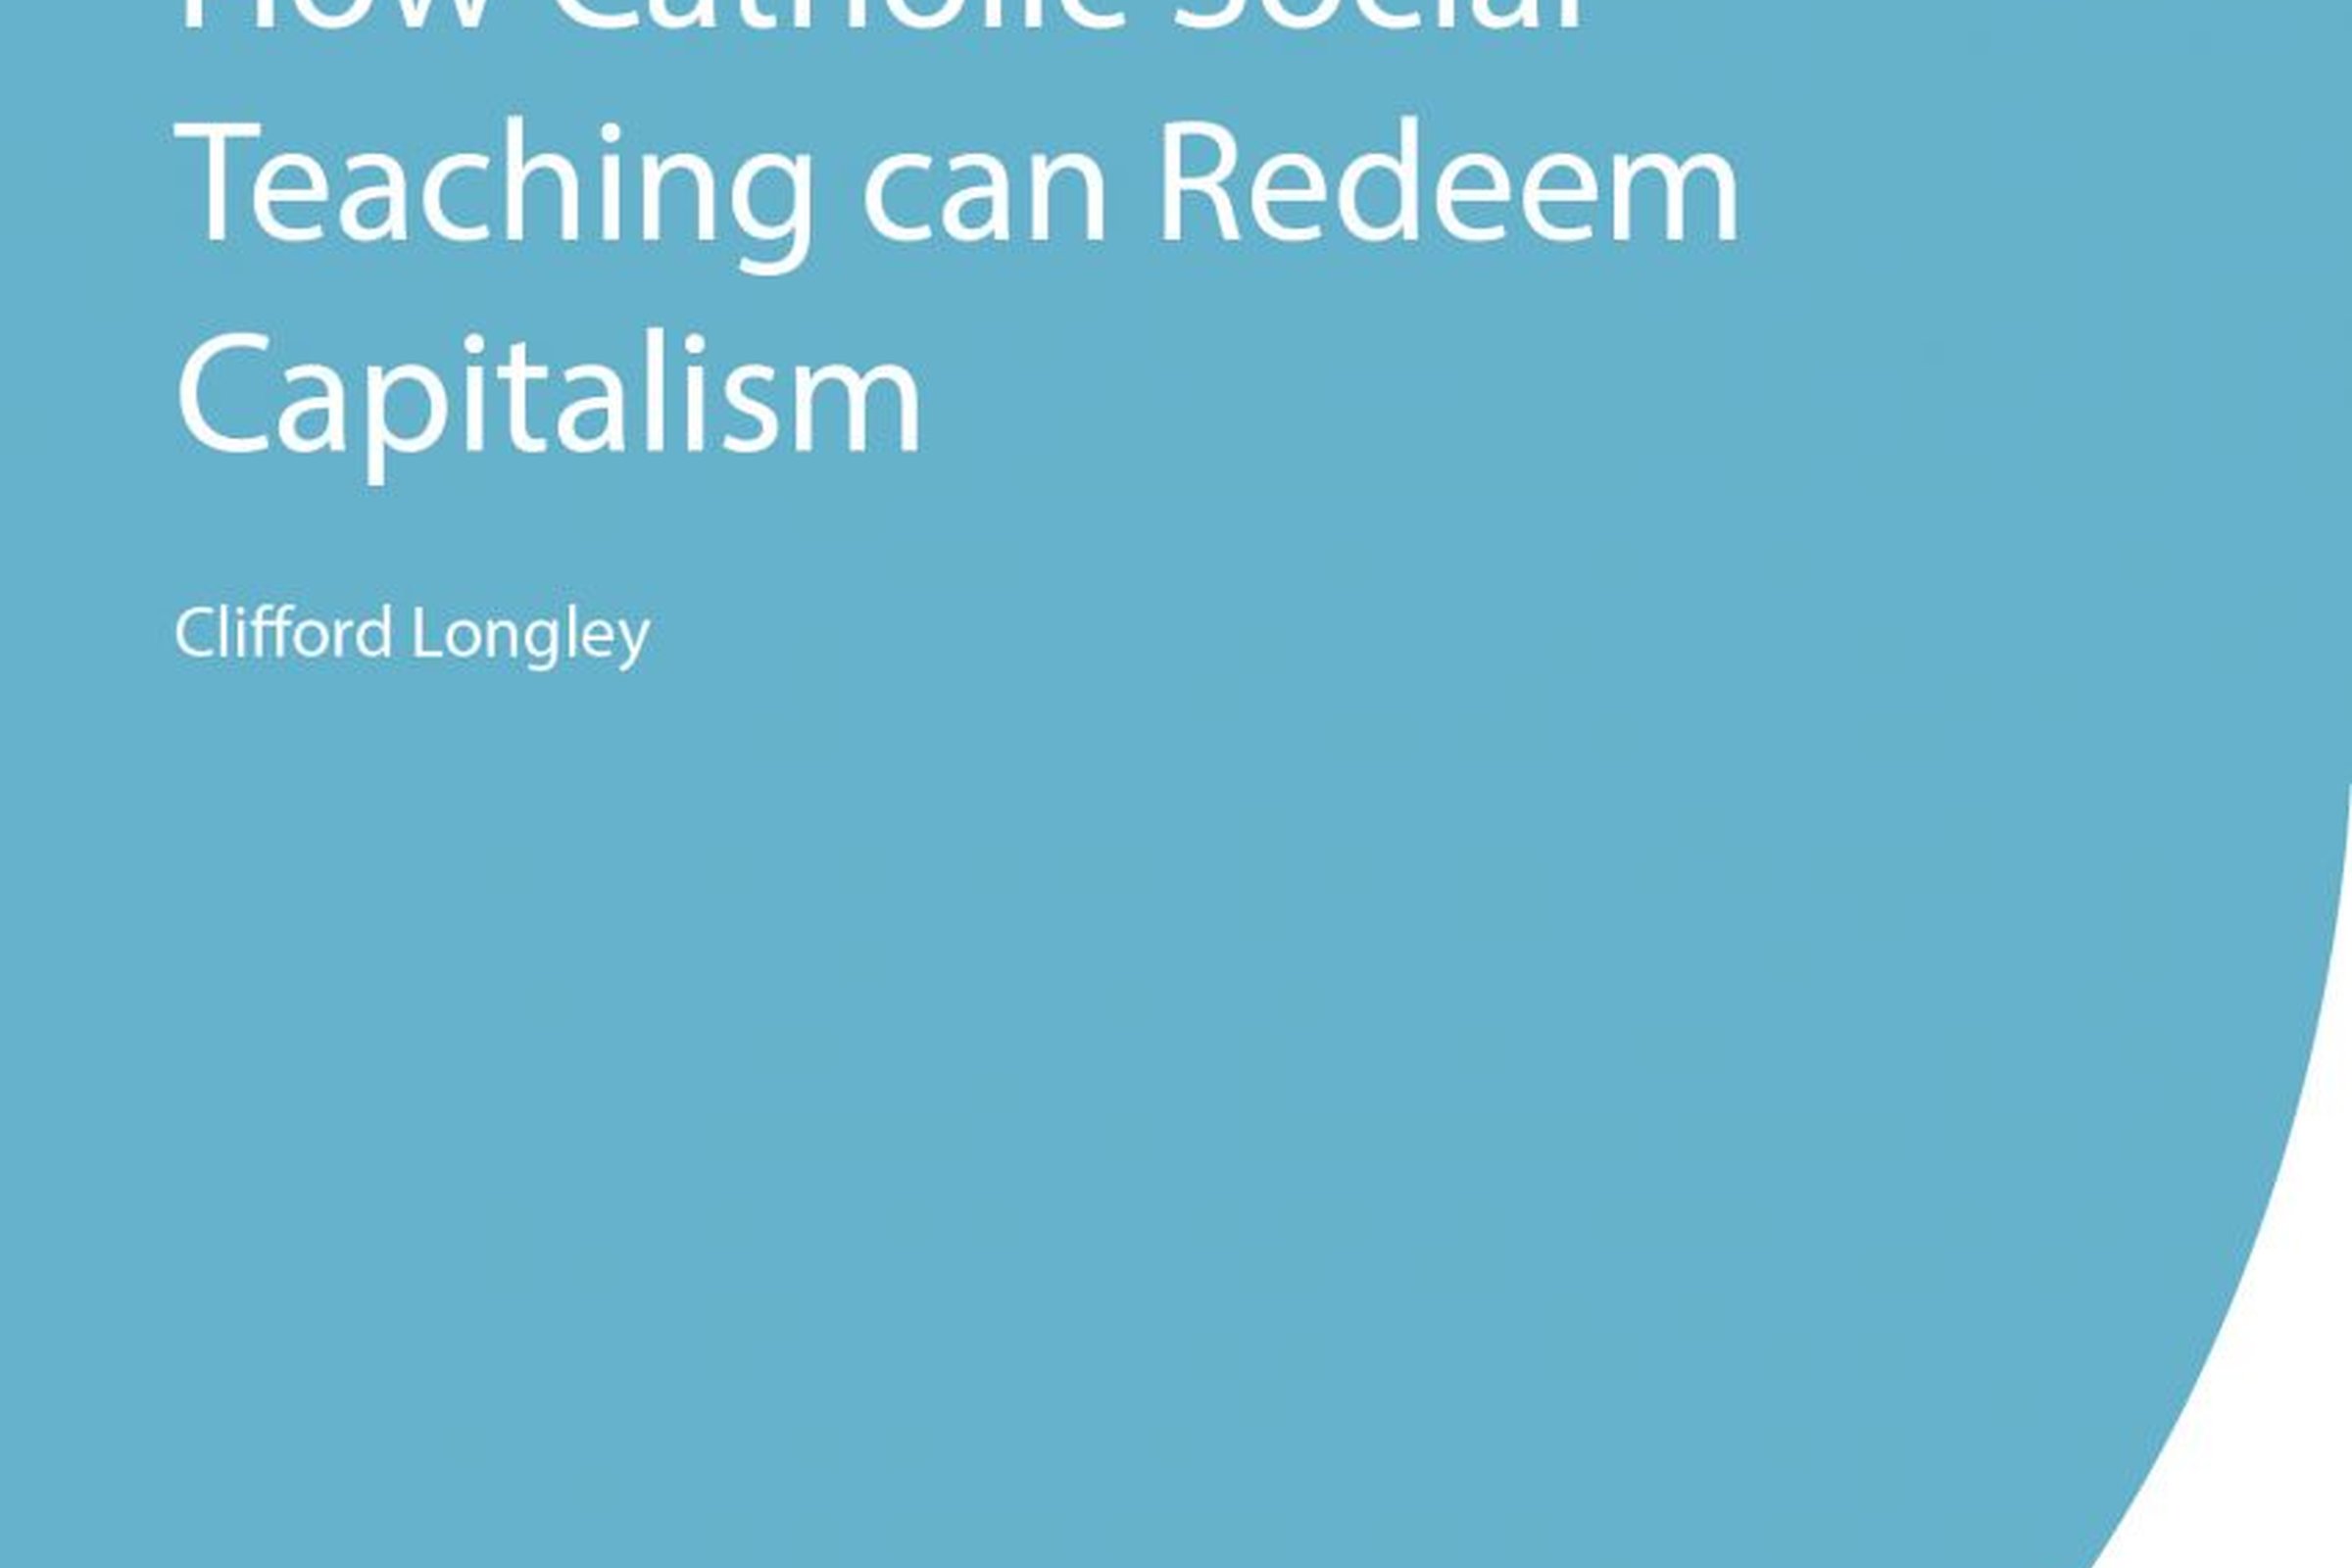 Just Money: How Catholic Social Teaching can Redeem Capitalism